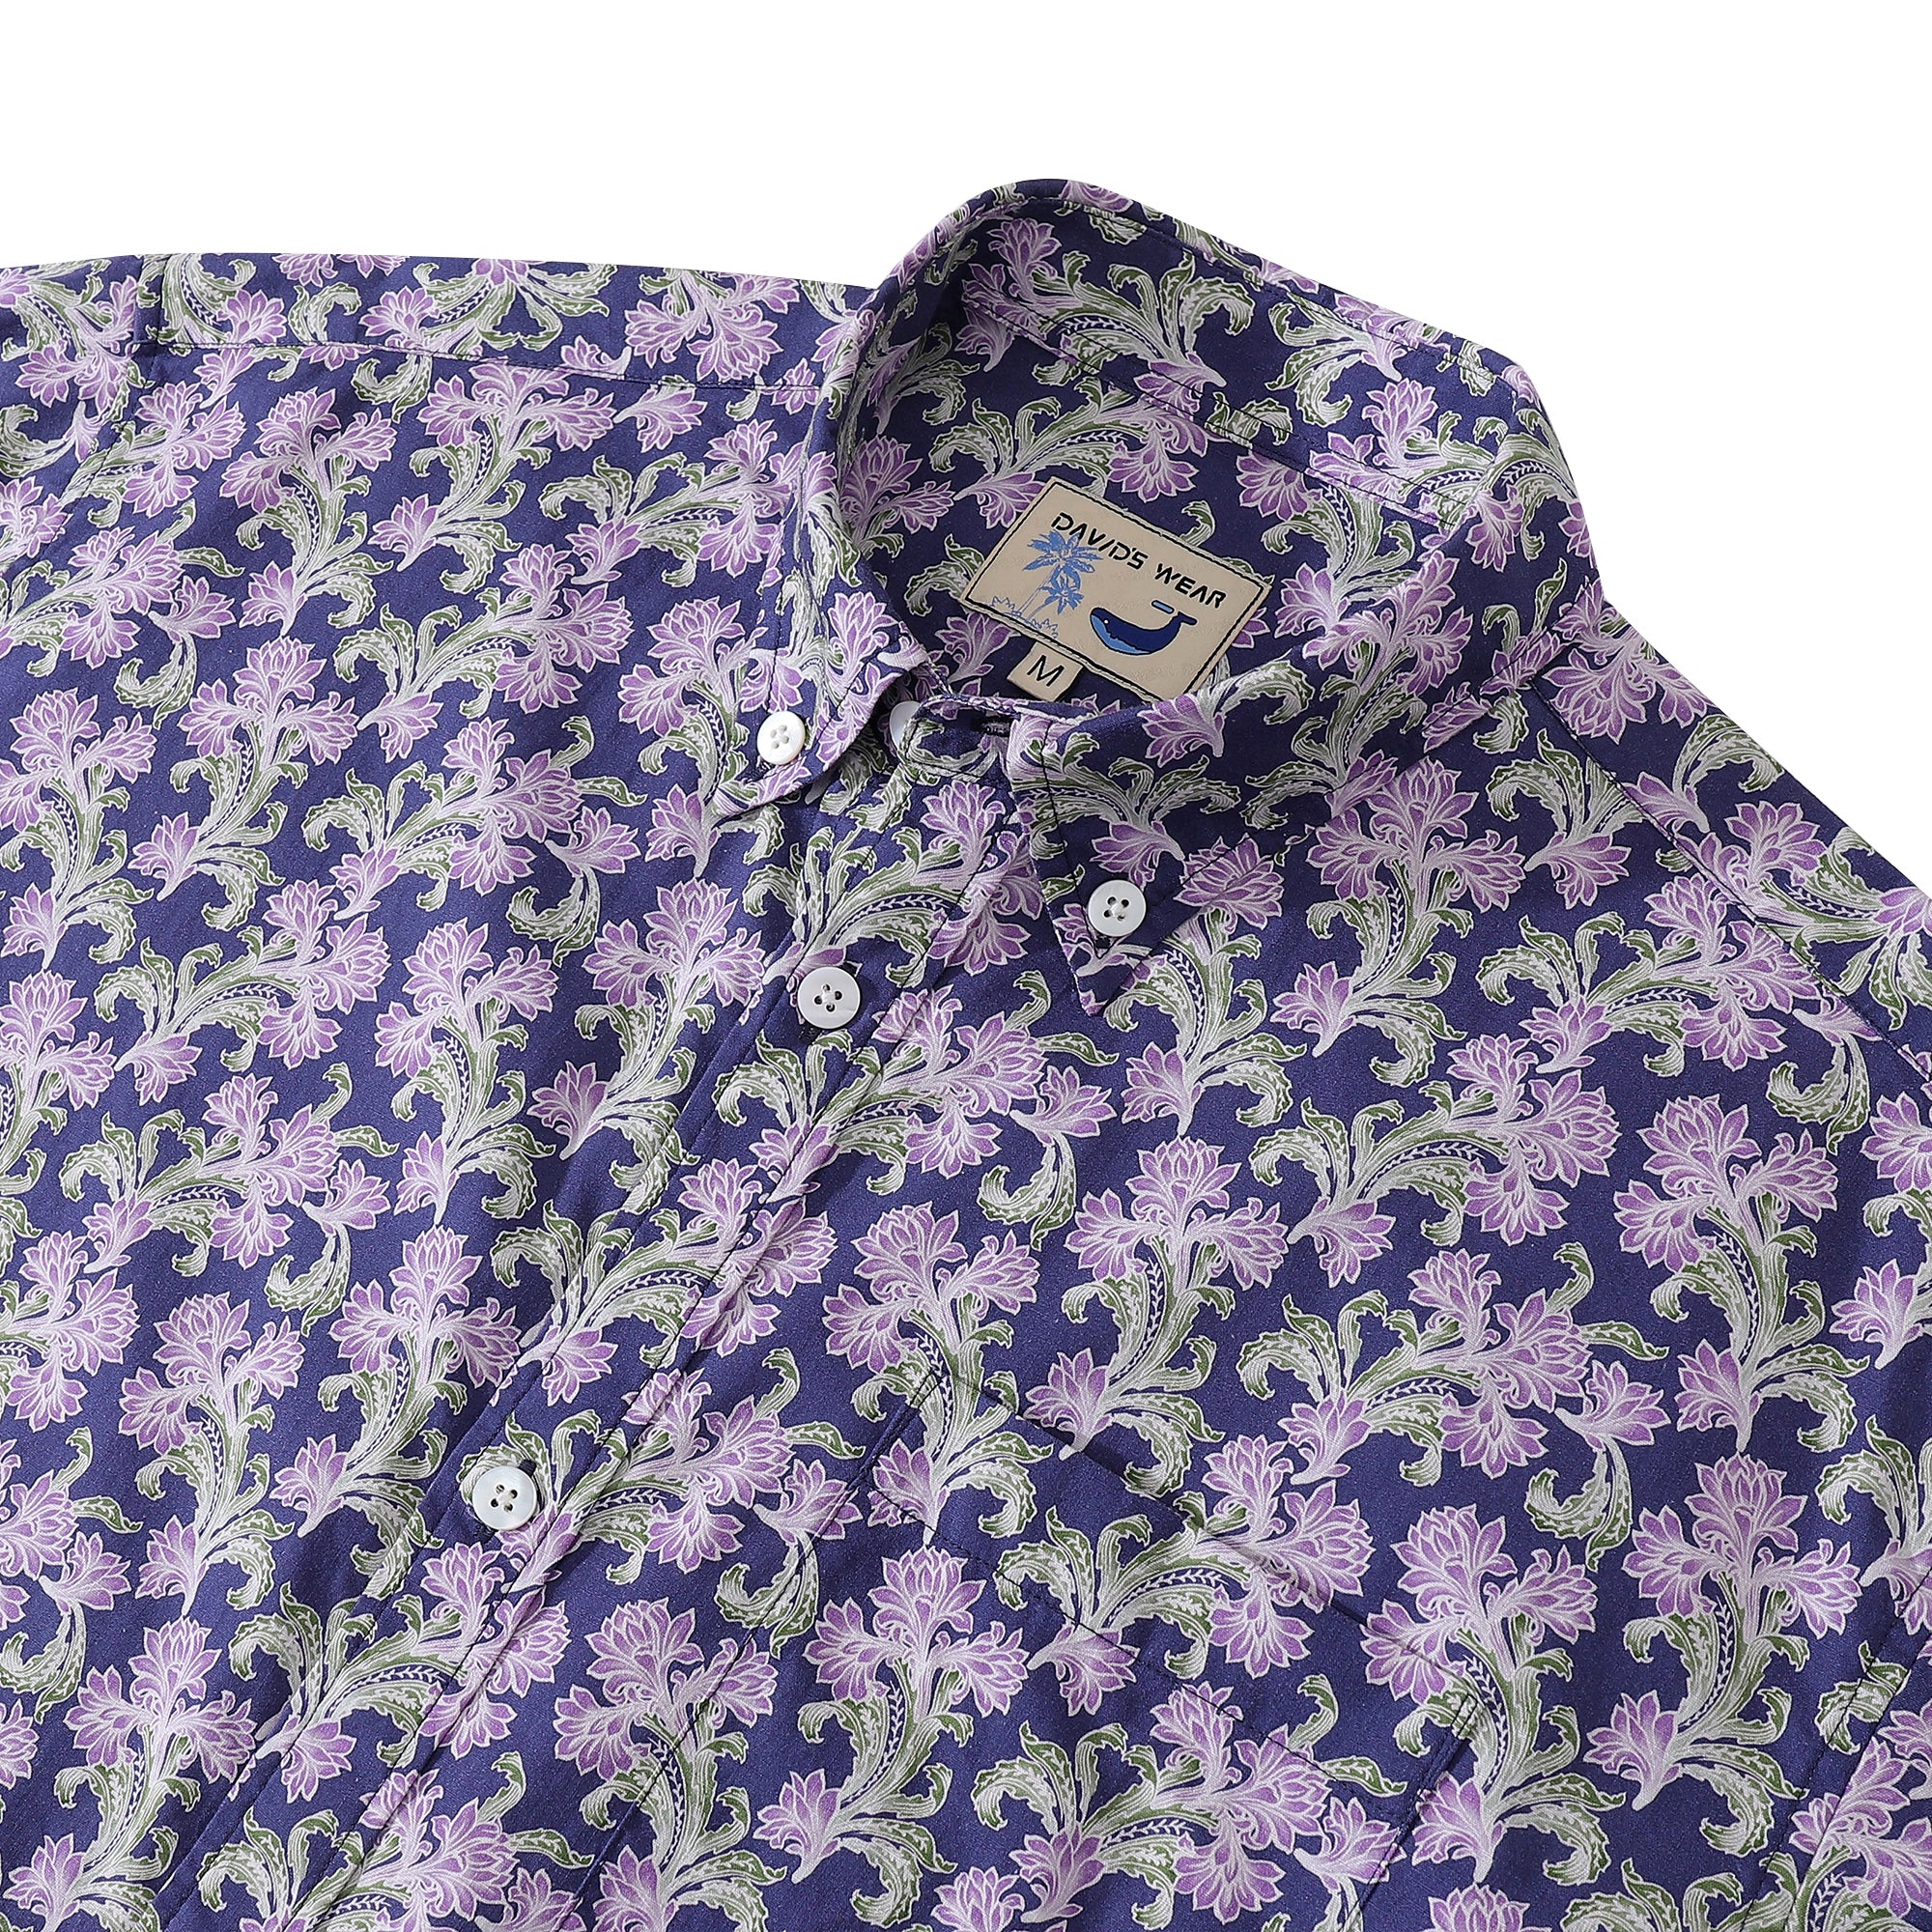 Men's Button Down Morris Shirt Purple Floral Cotton Aloha Shirt Hawaiian Shirt